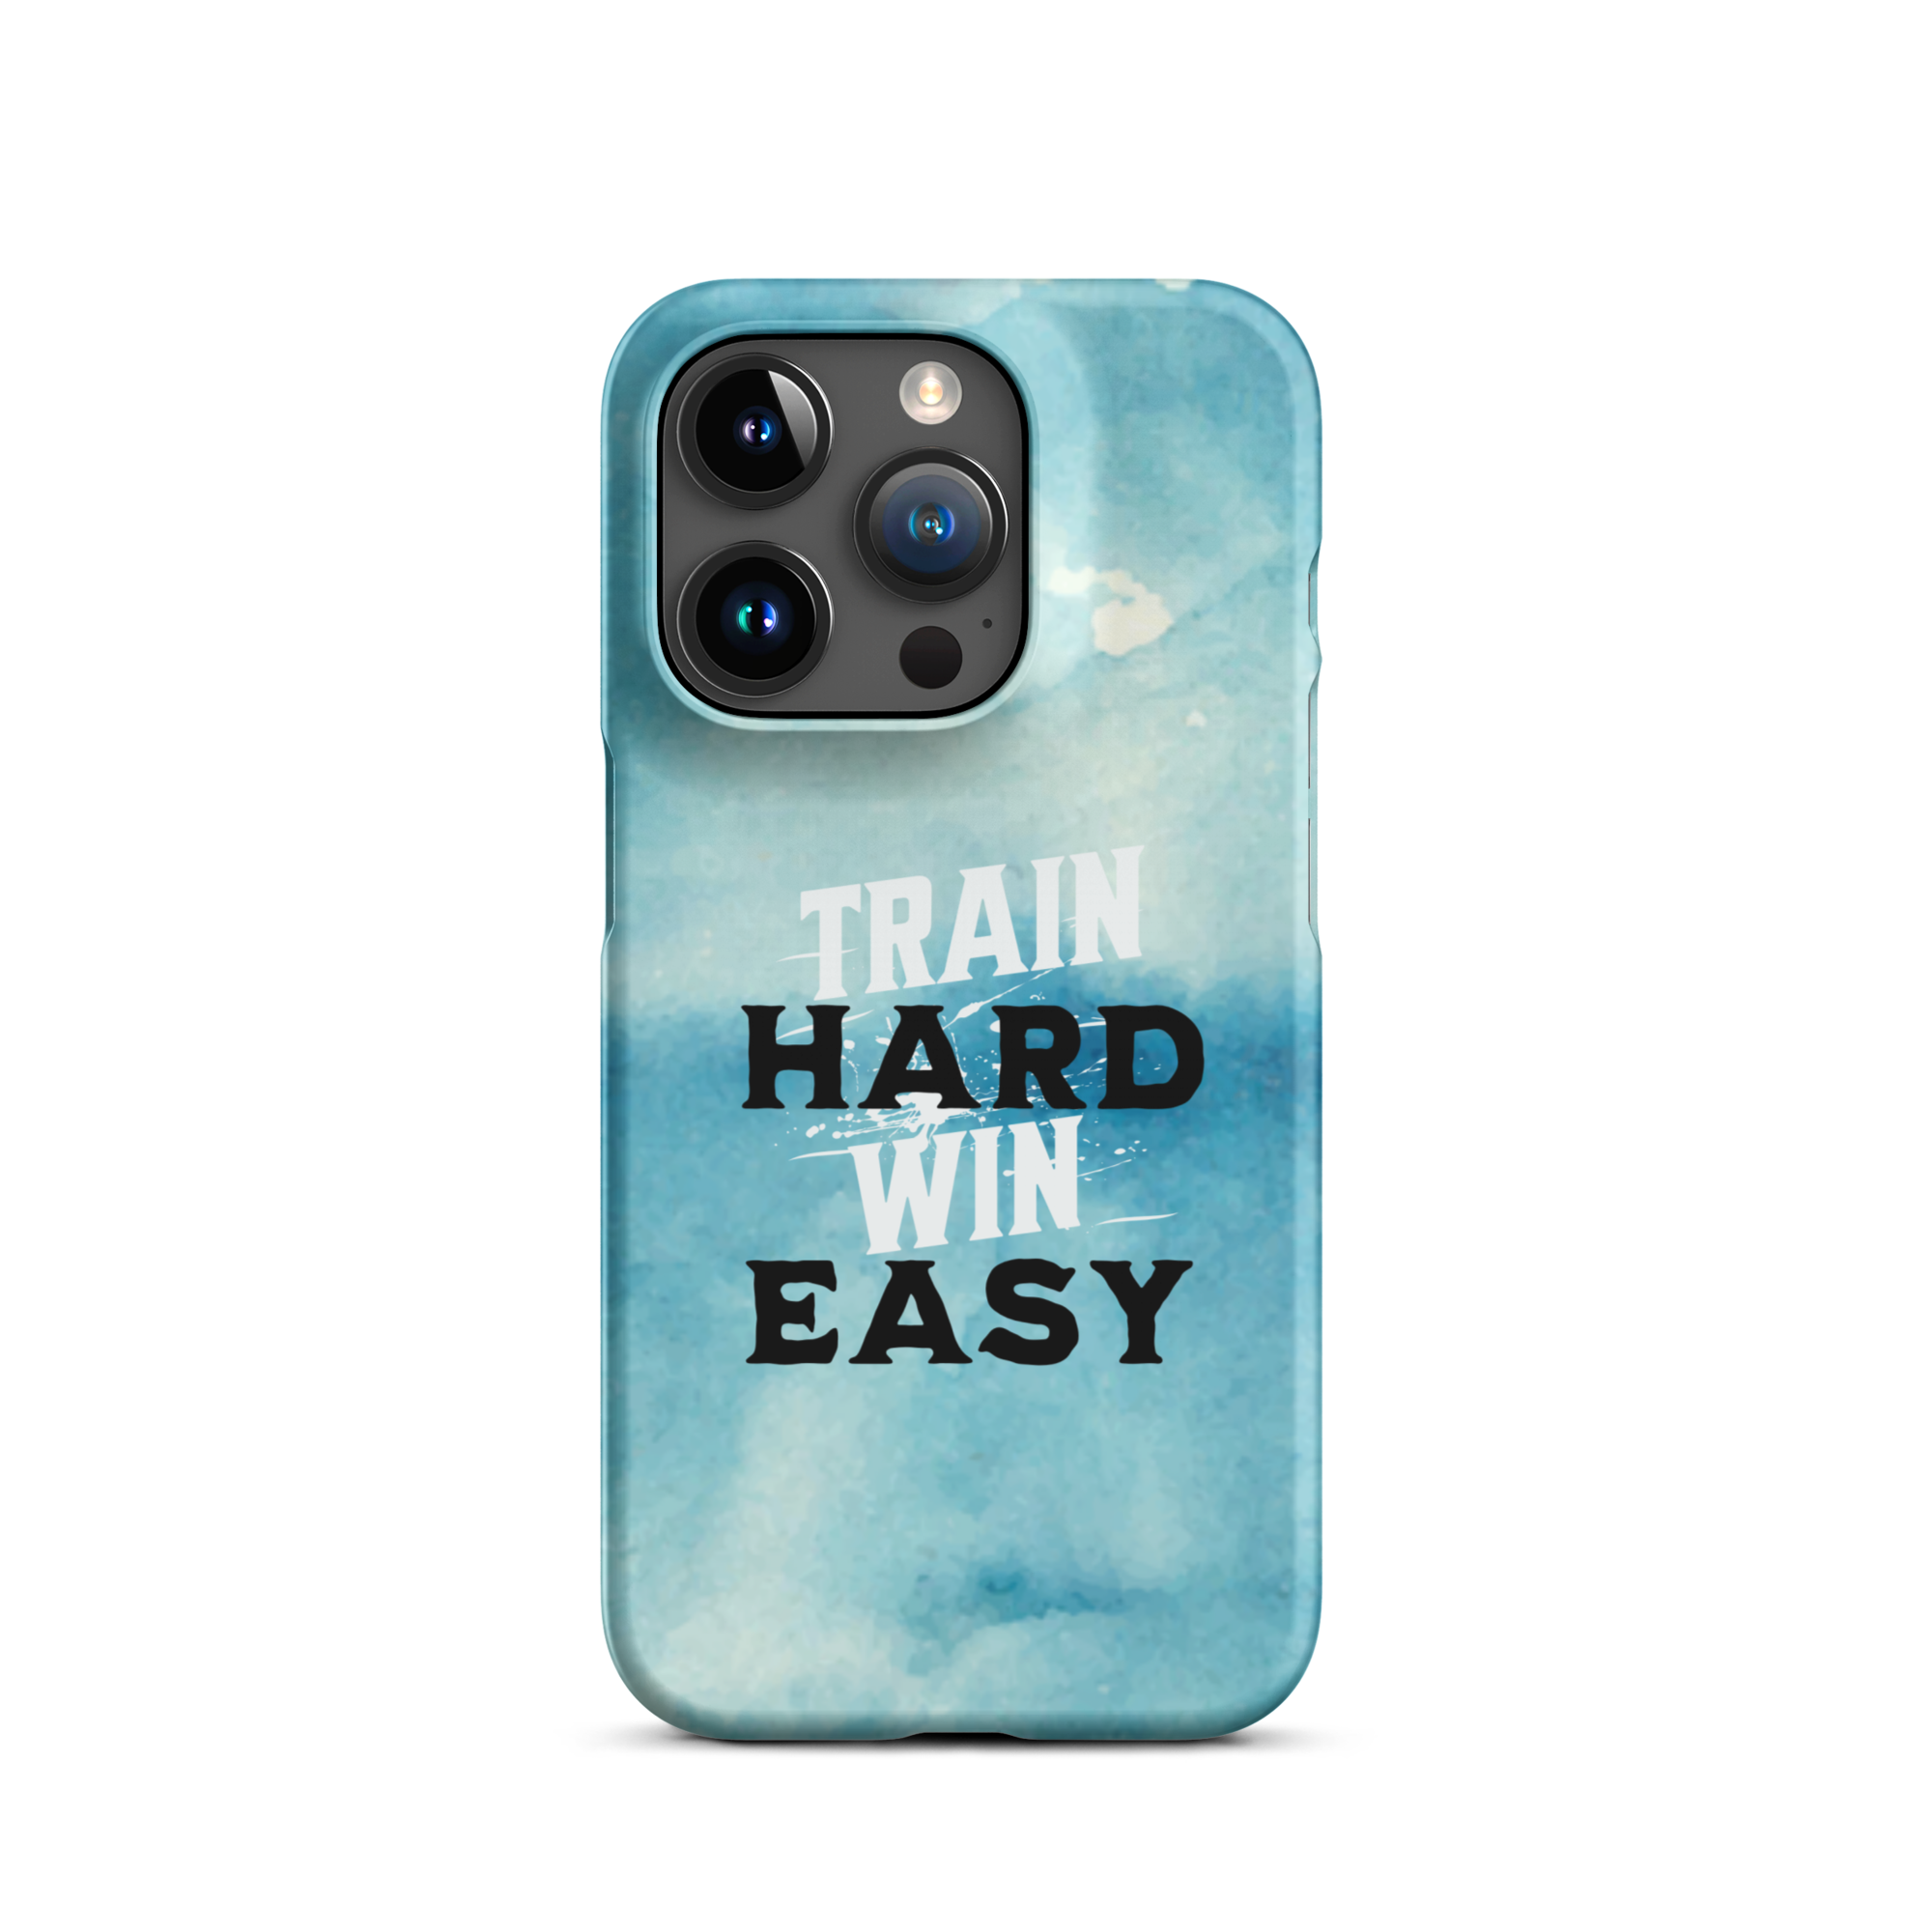 Train Hard, Win Easy iPhone case